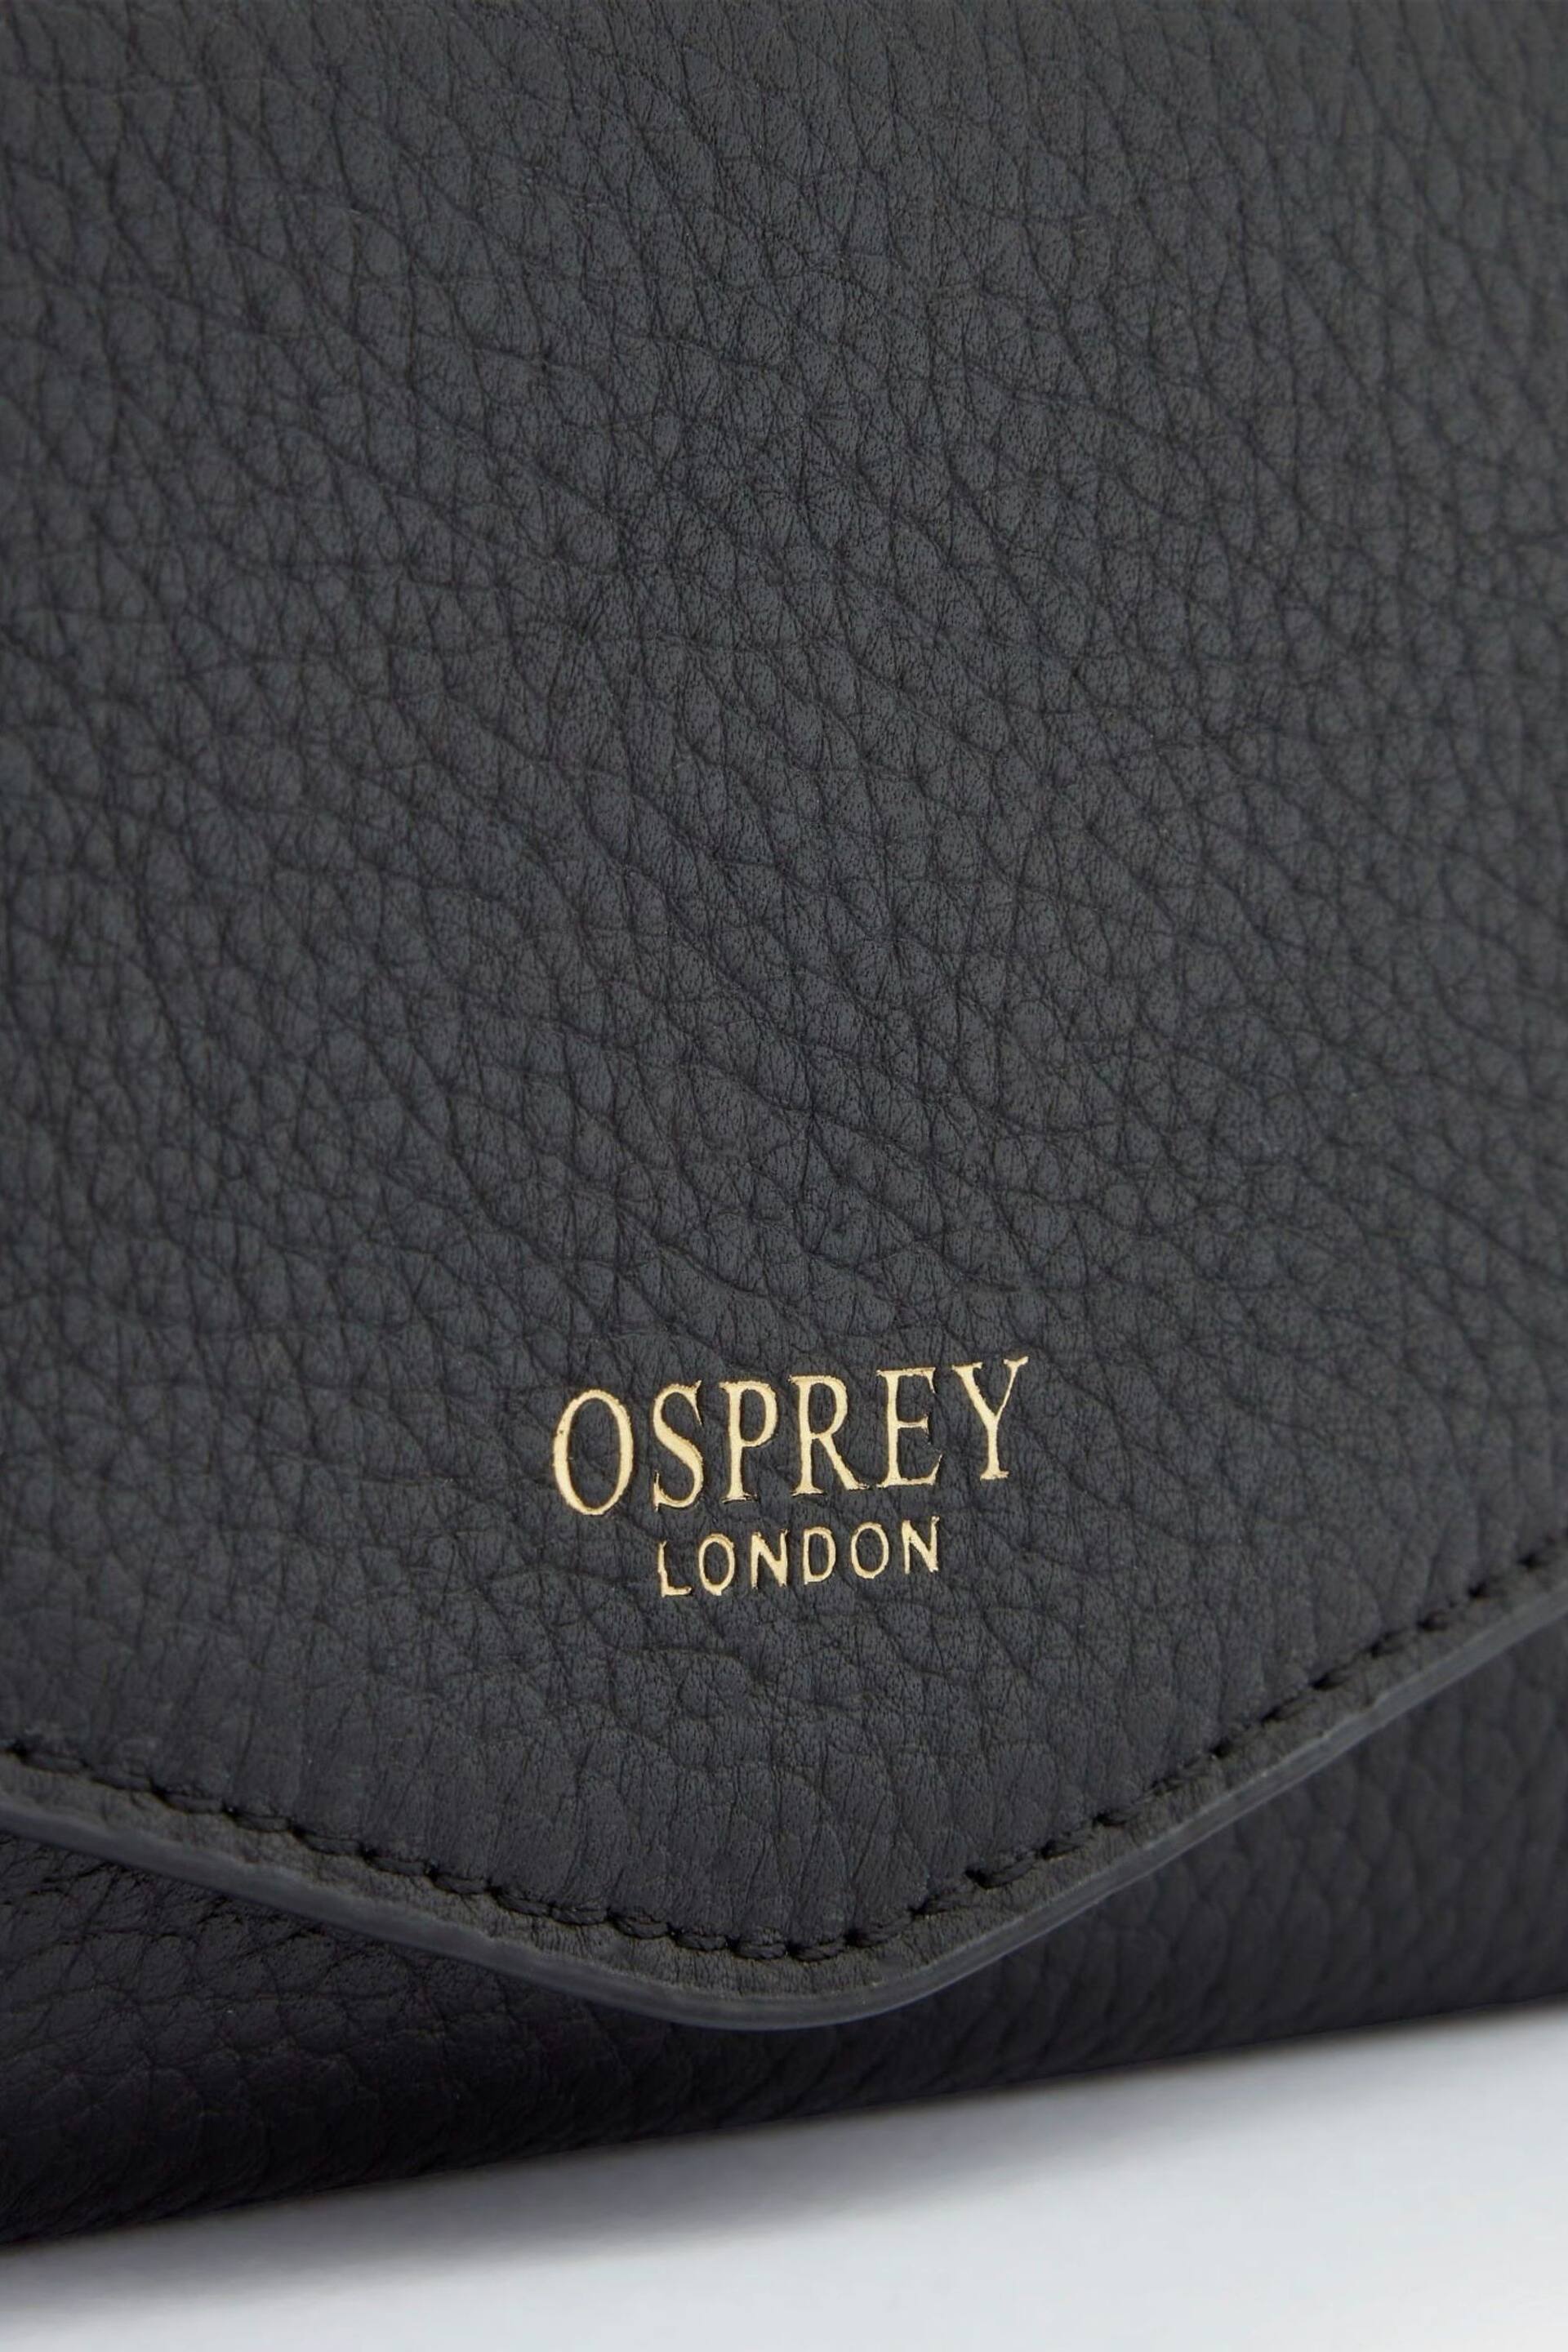 OSPREY LONDON The Hendrix Leather Matinee Purse - Image 6 of 6